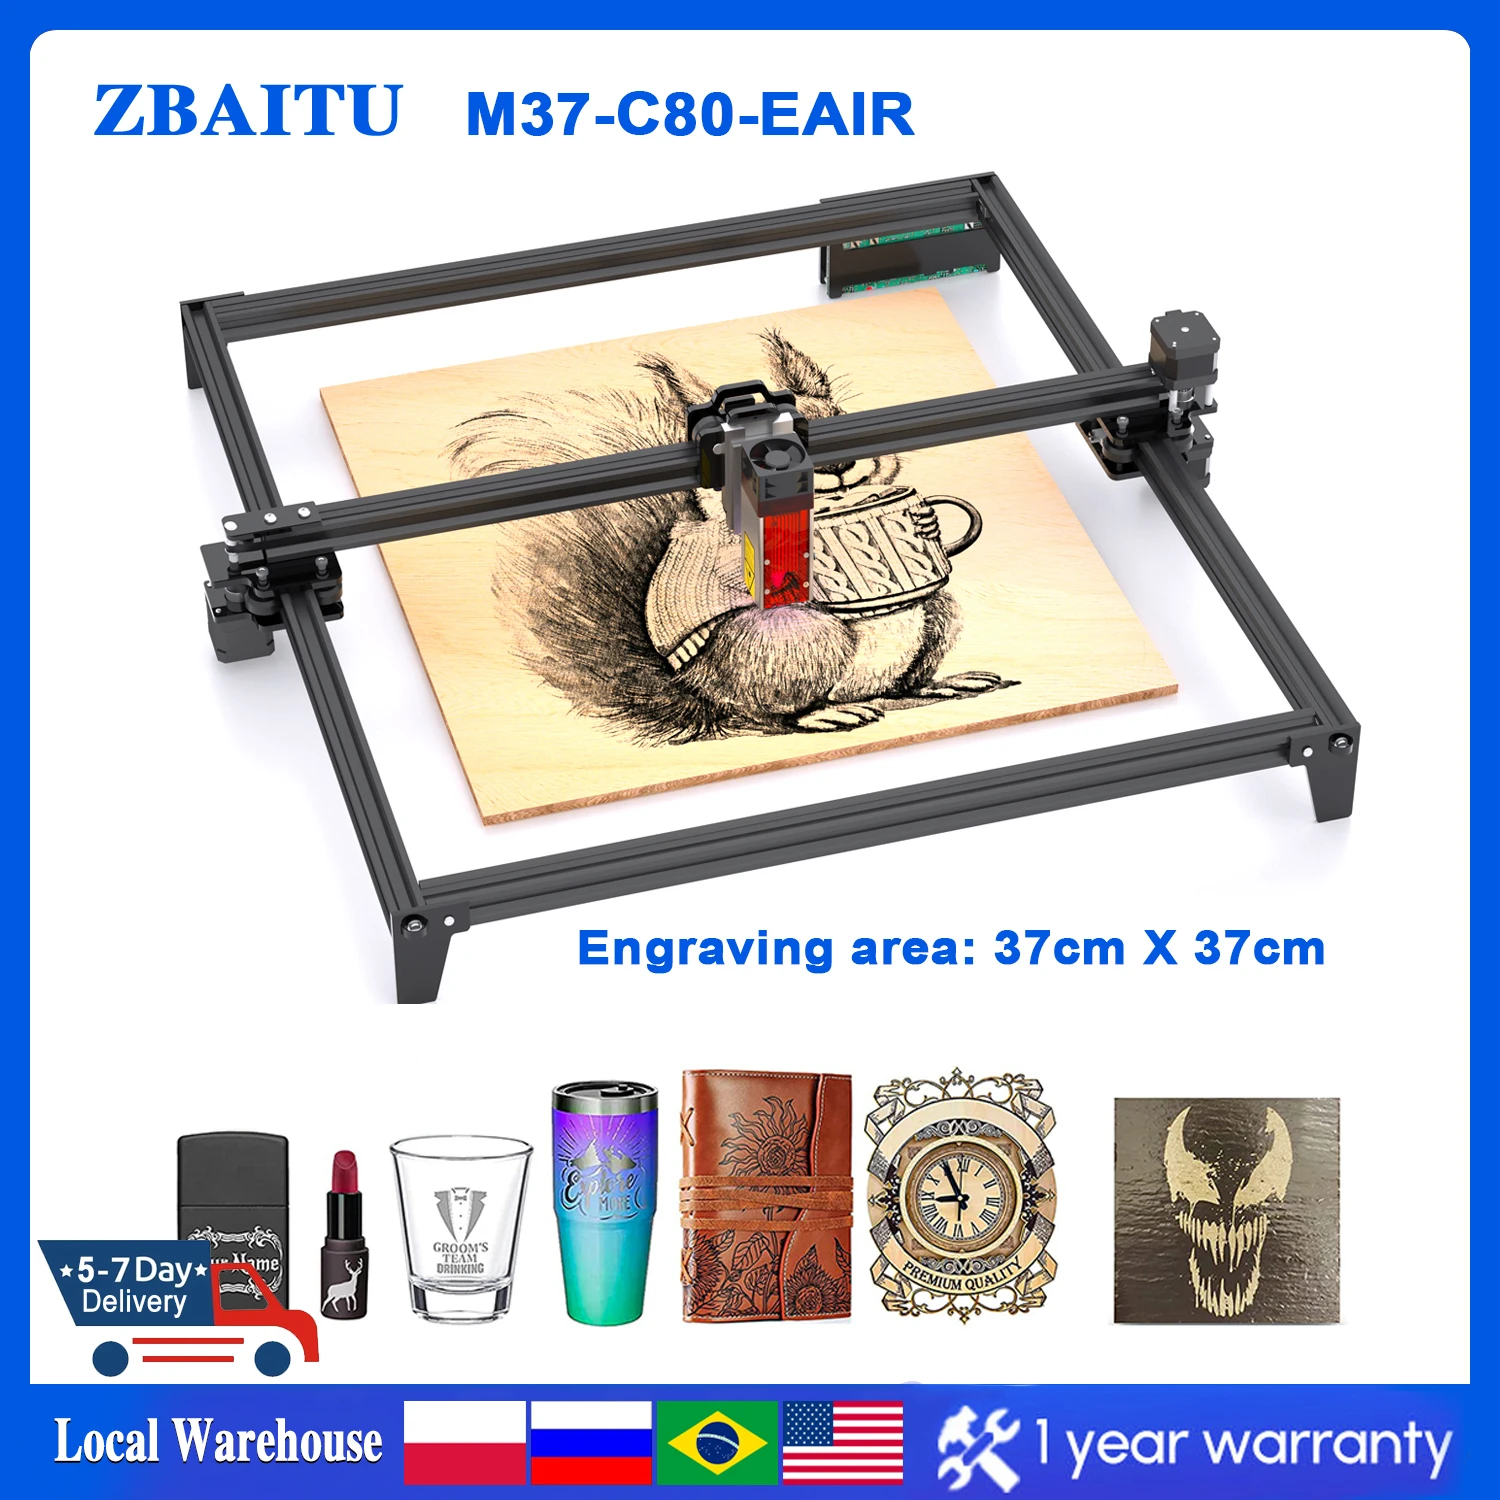 ZBAITU Mini Laser Engraver Woodworking Machine 80W CNC Engraving Mark Printer Cutter Offline WIFI Control with Air Assist Nozzle